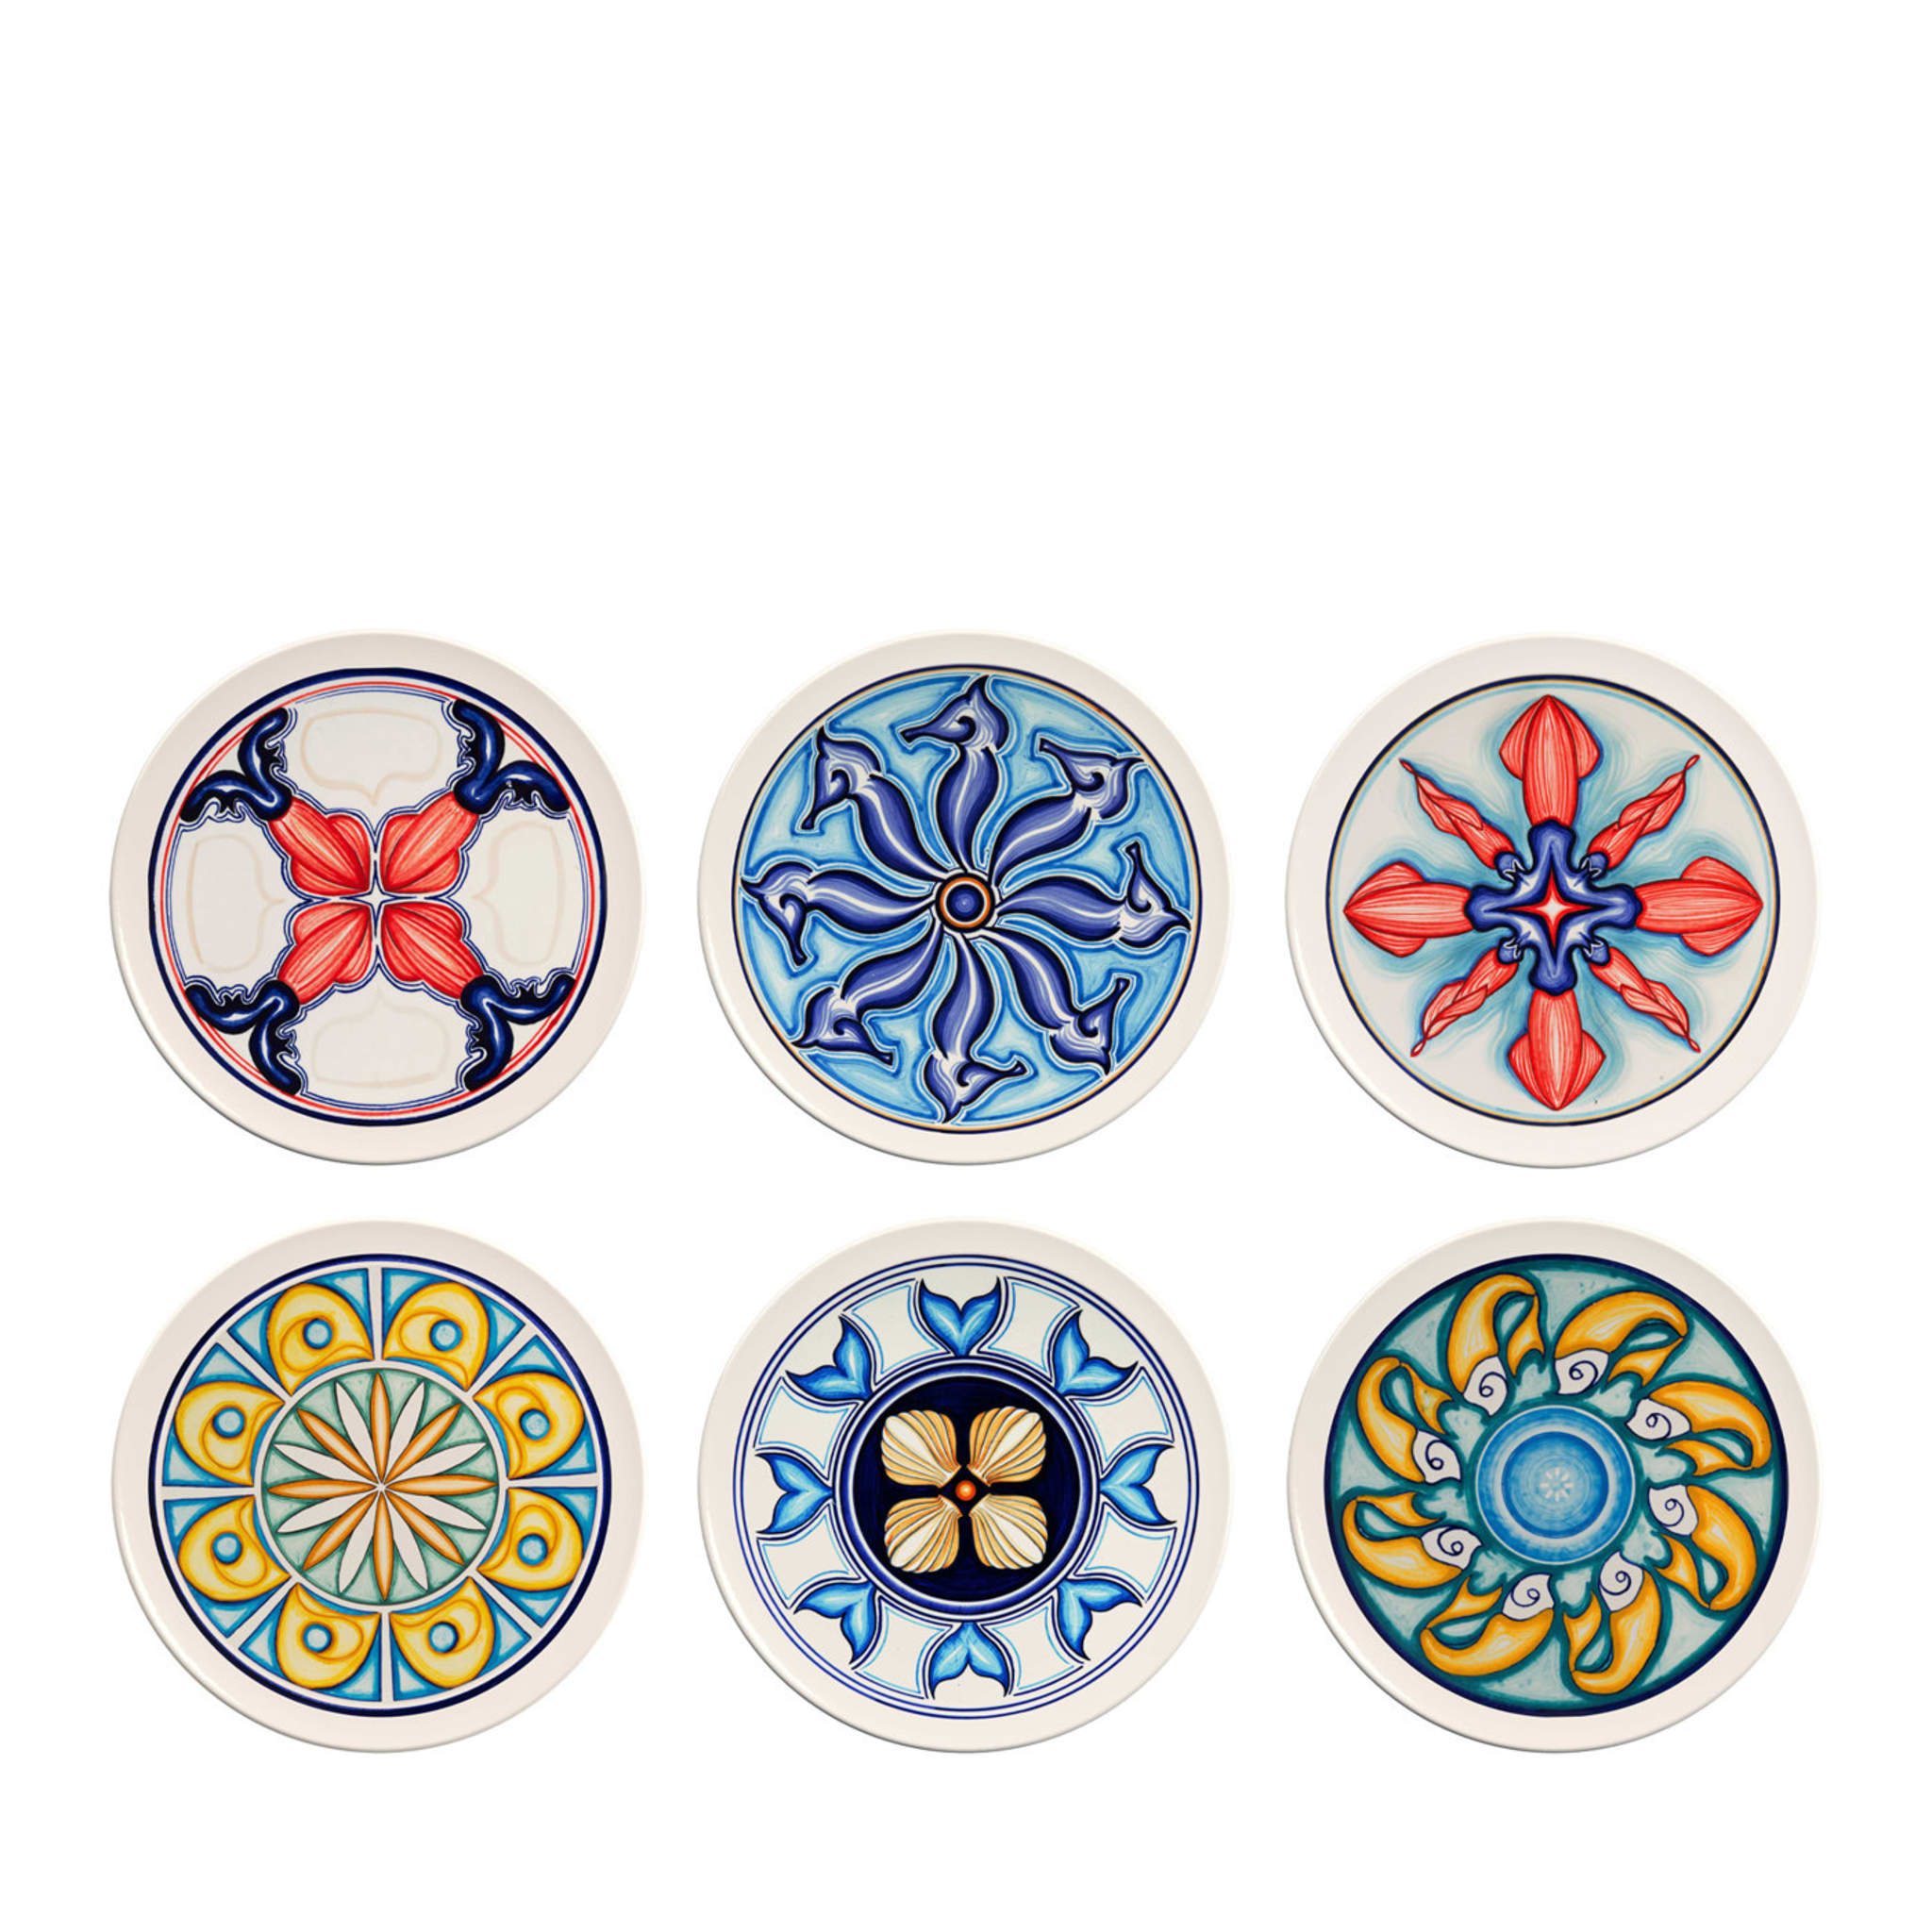 Colapesce Set of 6 Decorative Plates #3 - Main view